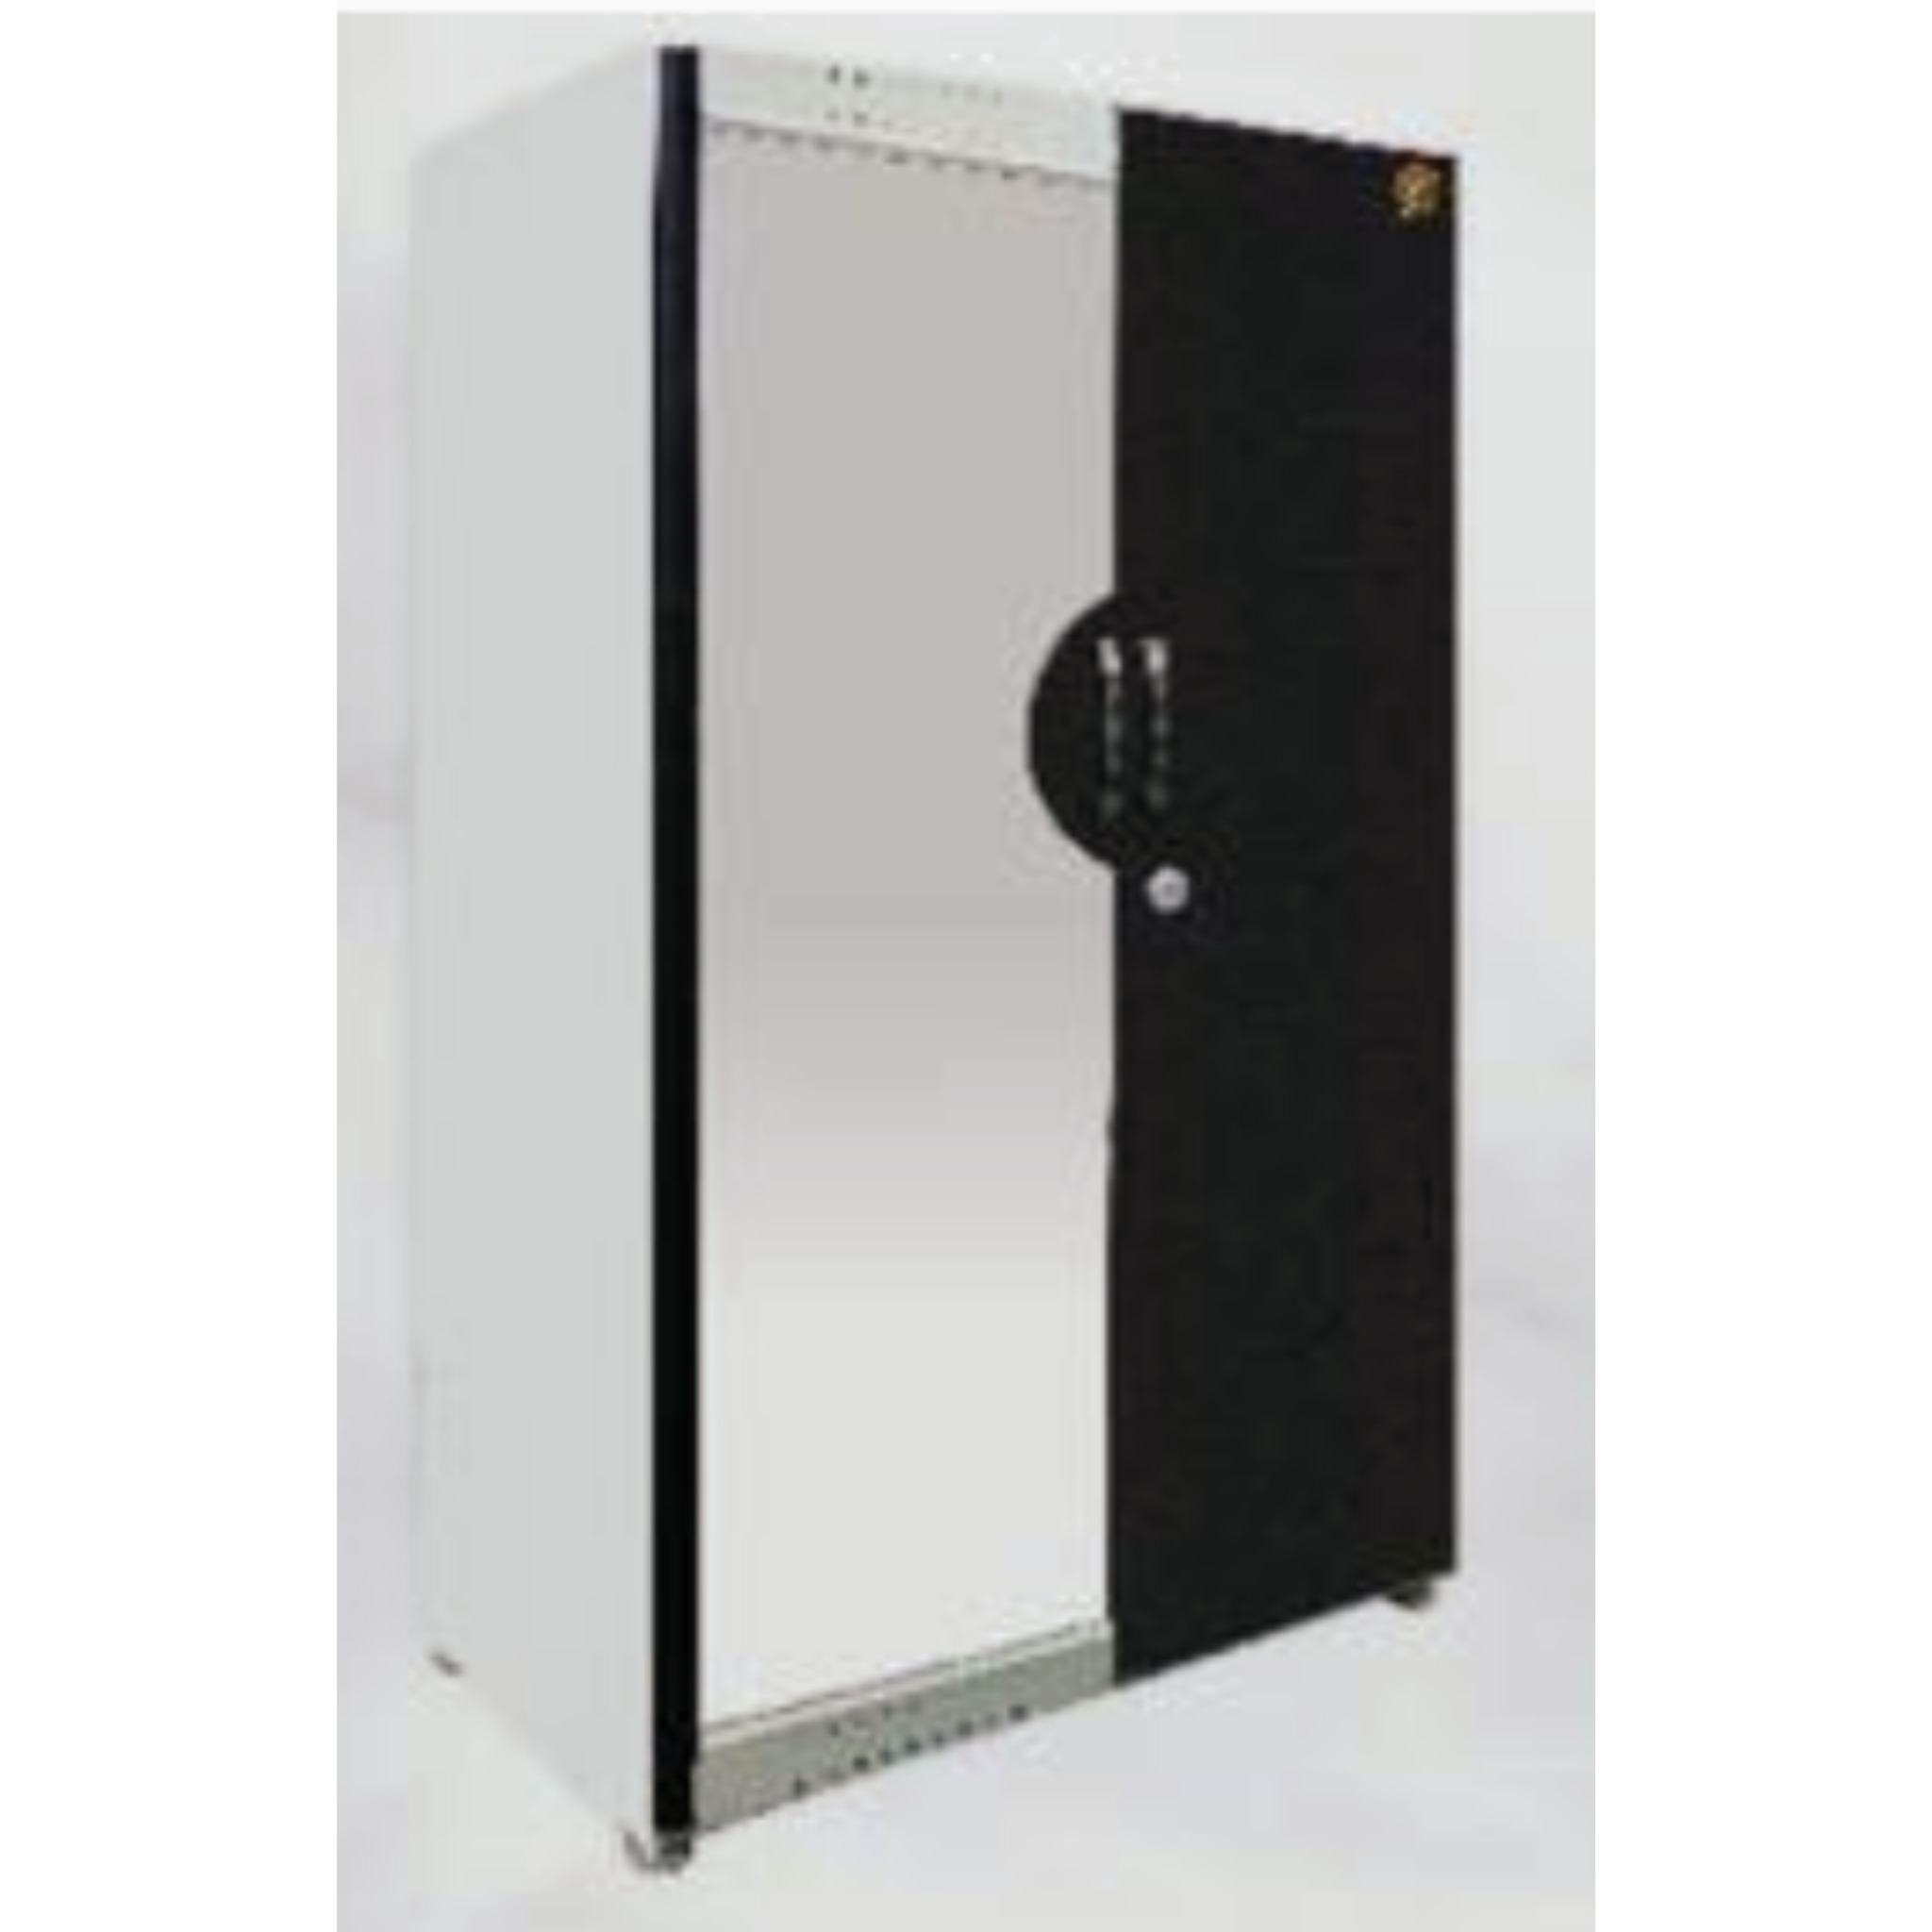 42"Deco Kiwari Metal Two Door Wardrobe with Inner Drawer Storage